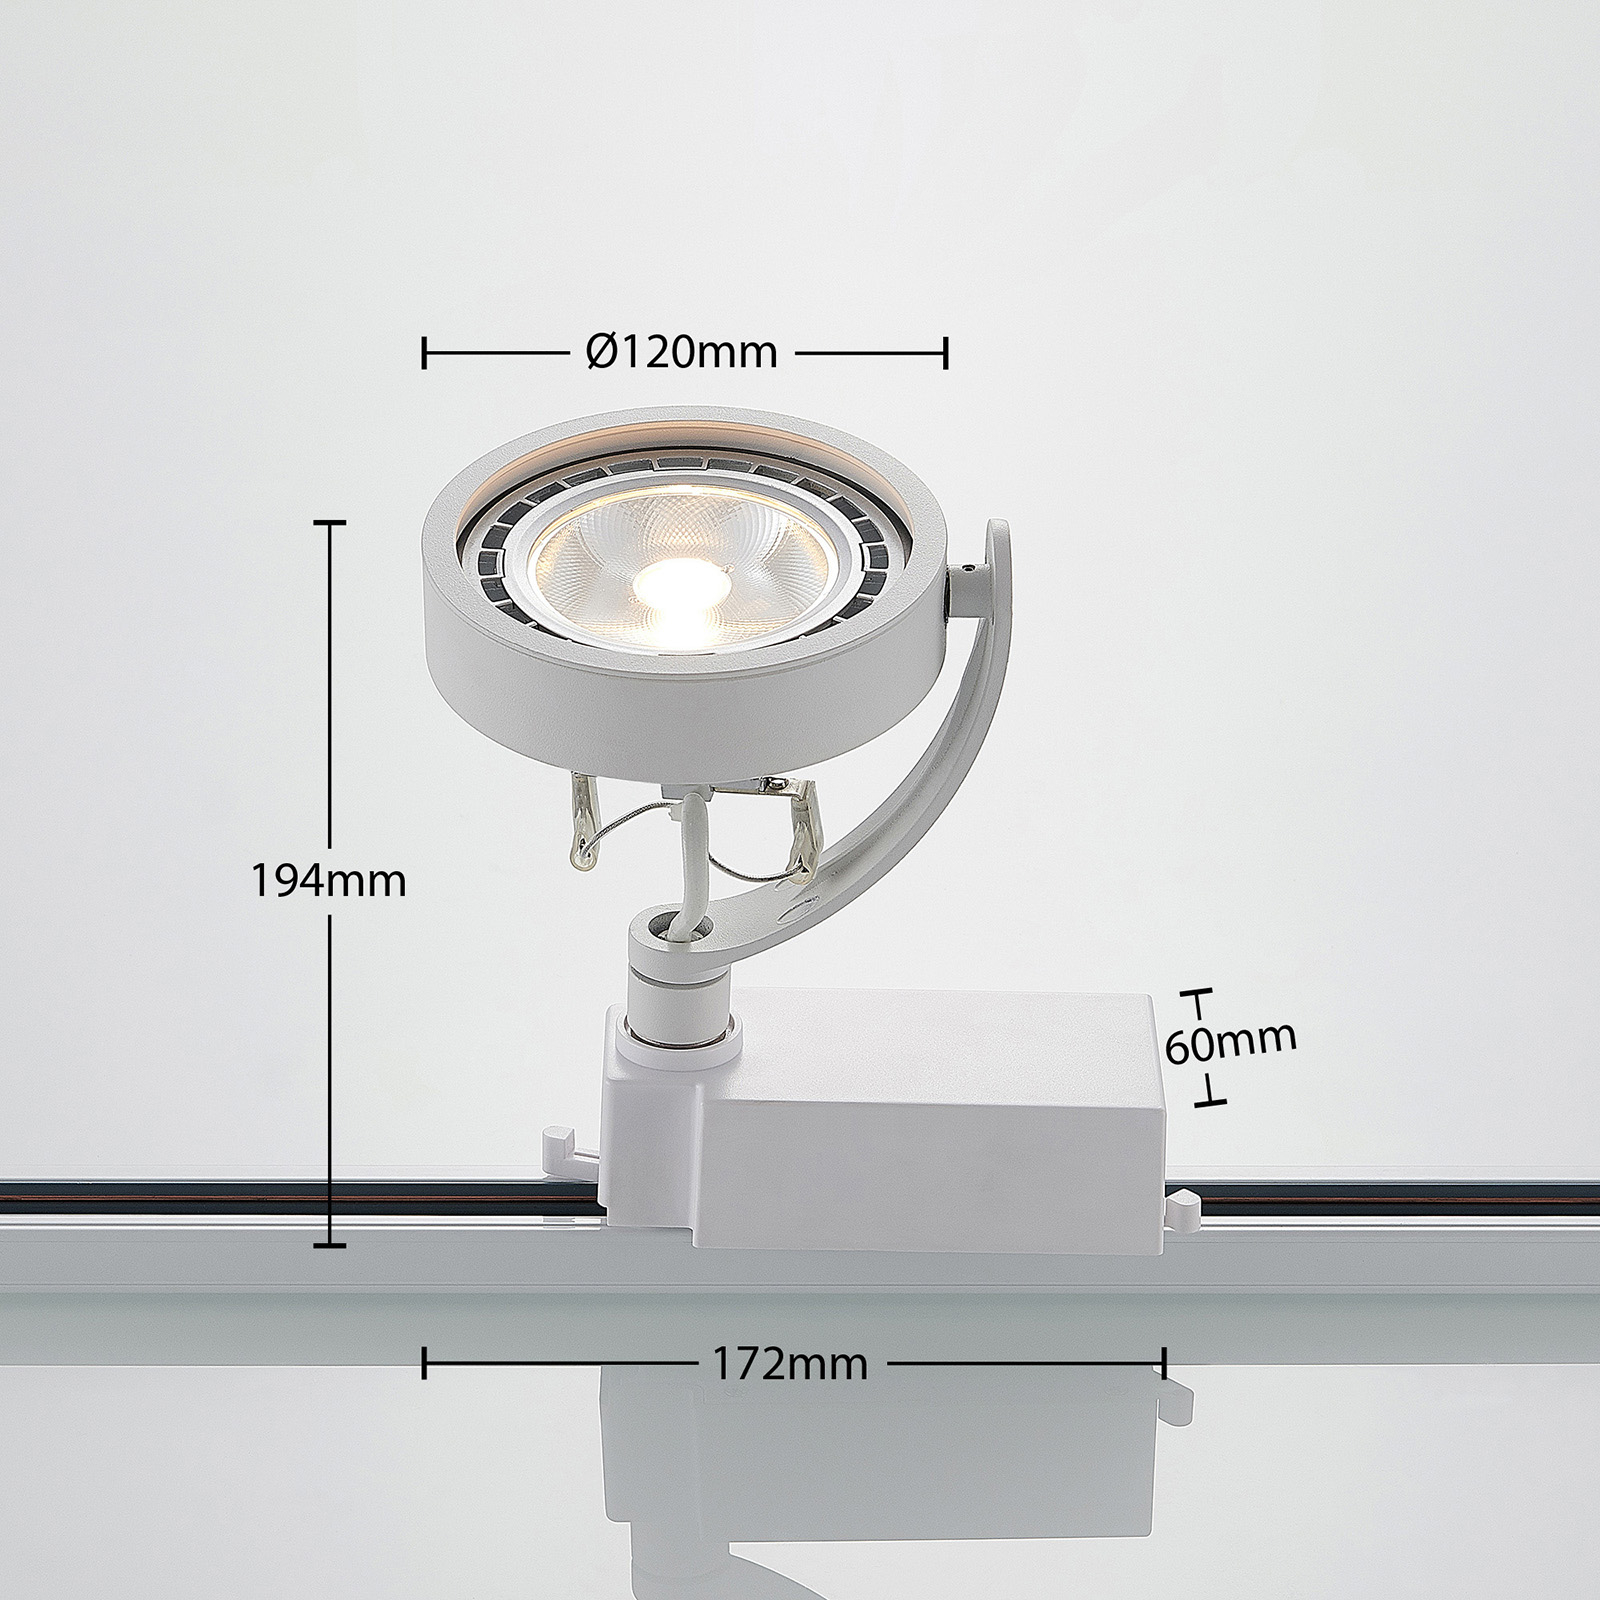 Rick spotlight, two-circuit track lighting system, white, 17.2 cm long